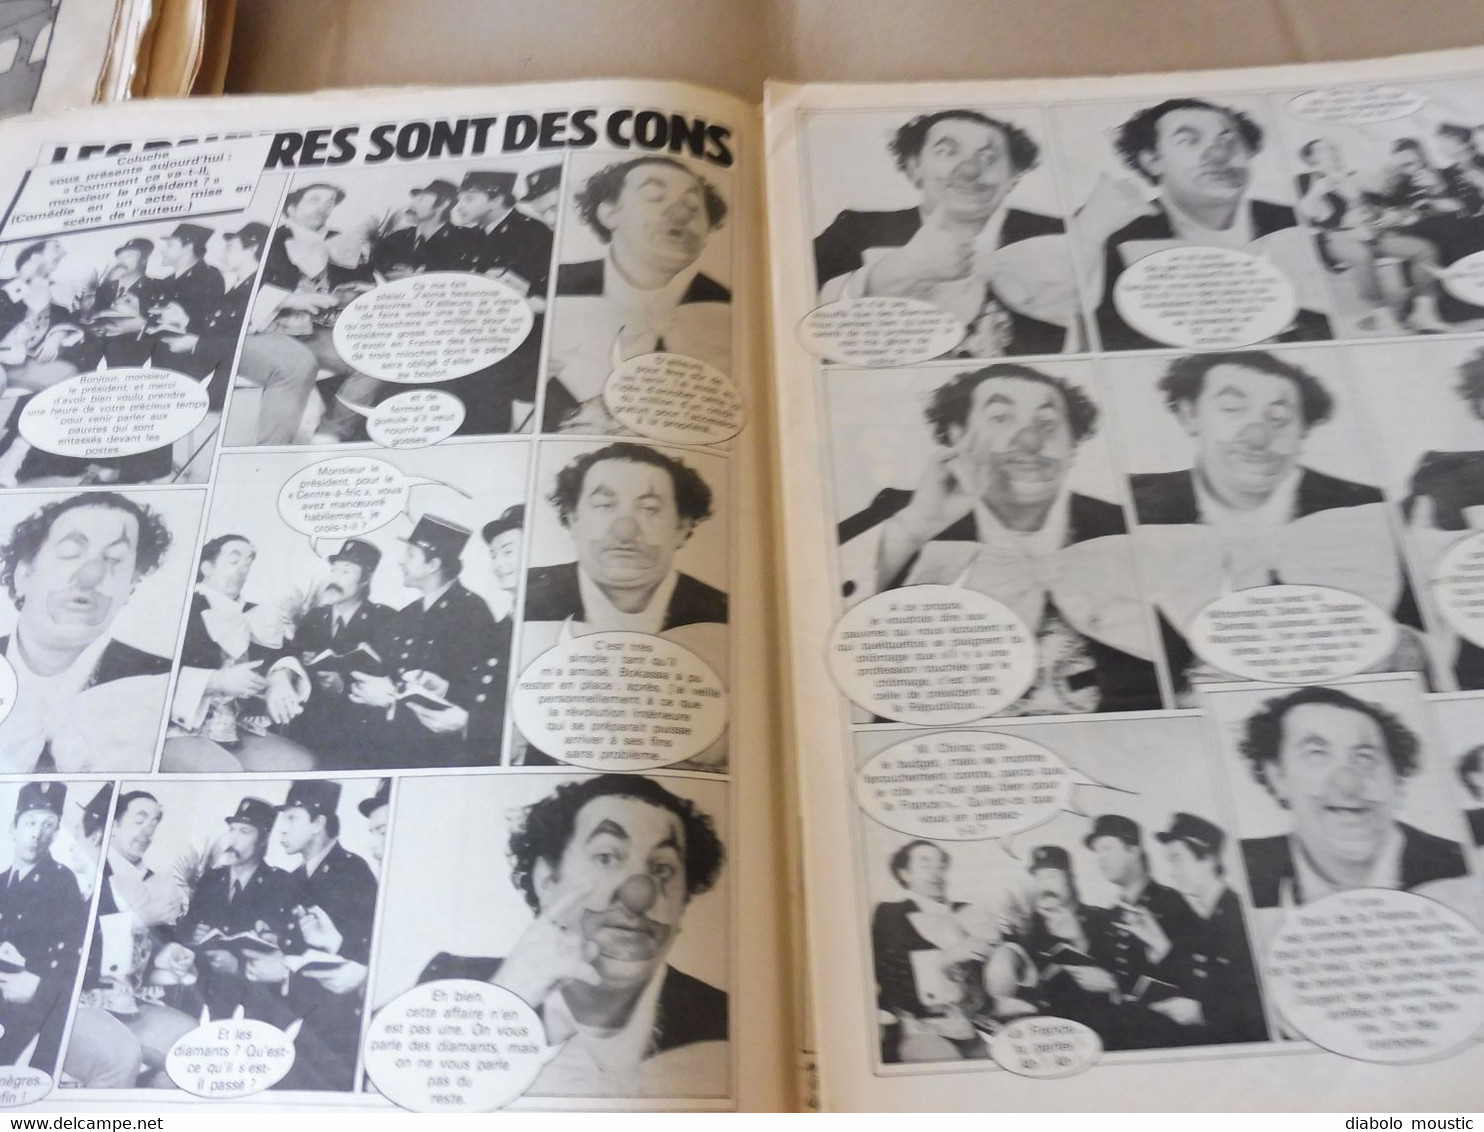 1978 La GAUCHE MORIBONDE.....; Coluche ...........Etc  (Charlie Hebdo) - Humor